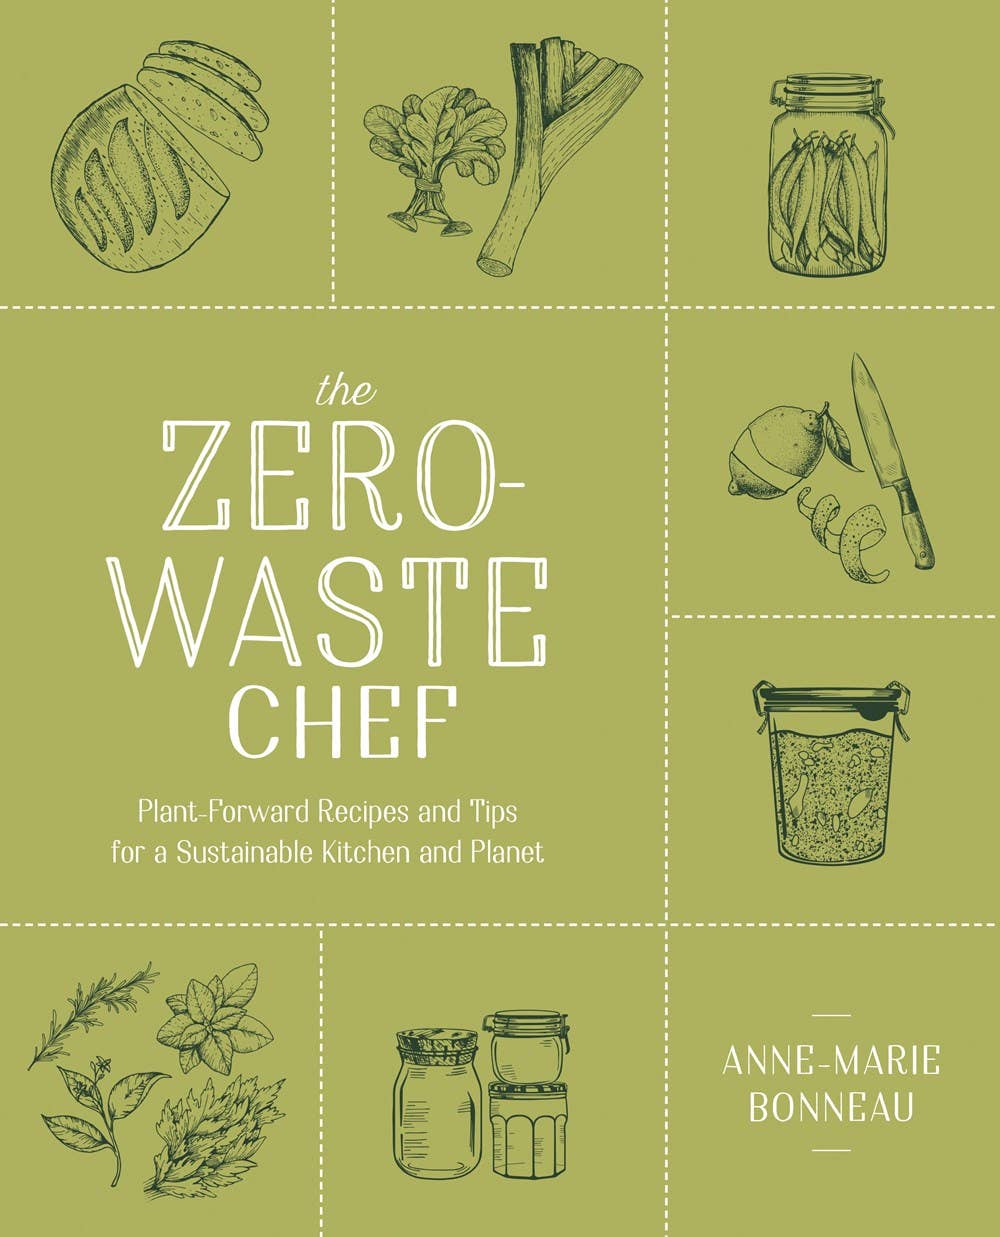 Zero-Waste Chef: Plant-Forward Recipes and Tips